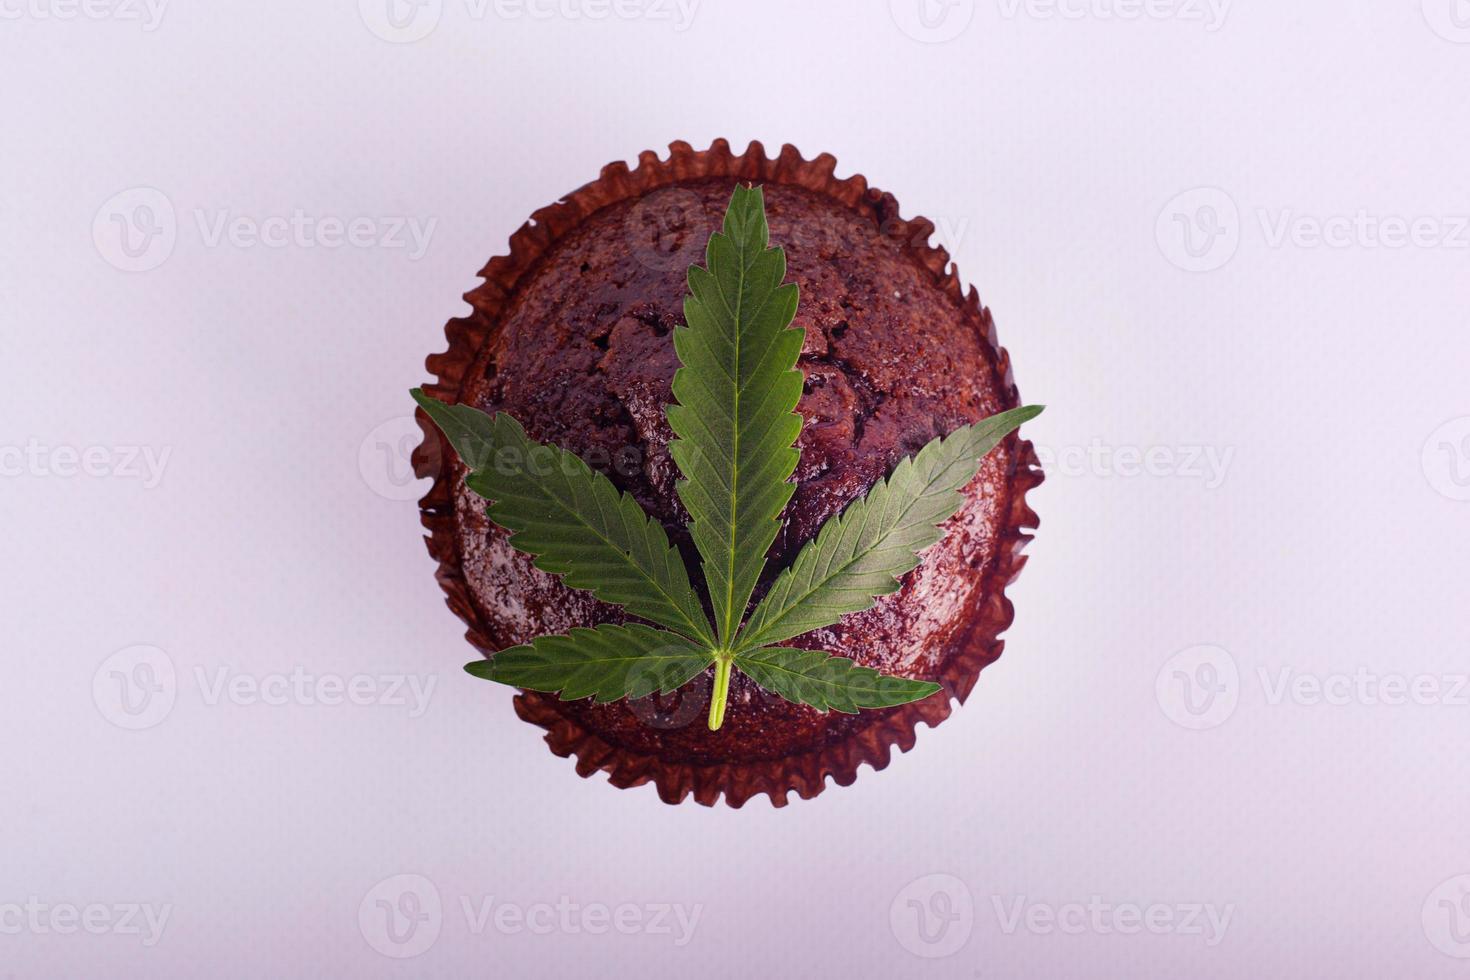 Chocolate muffin and green marijuana leaf photo